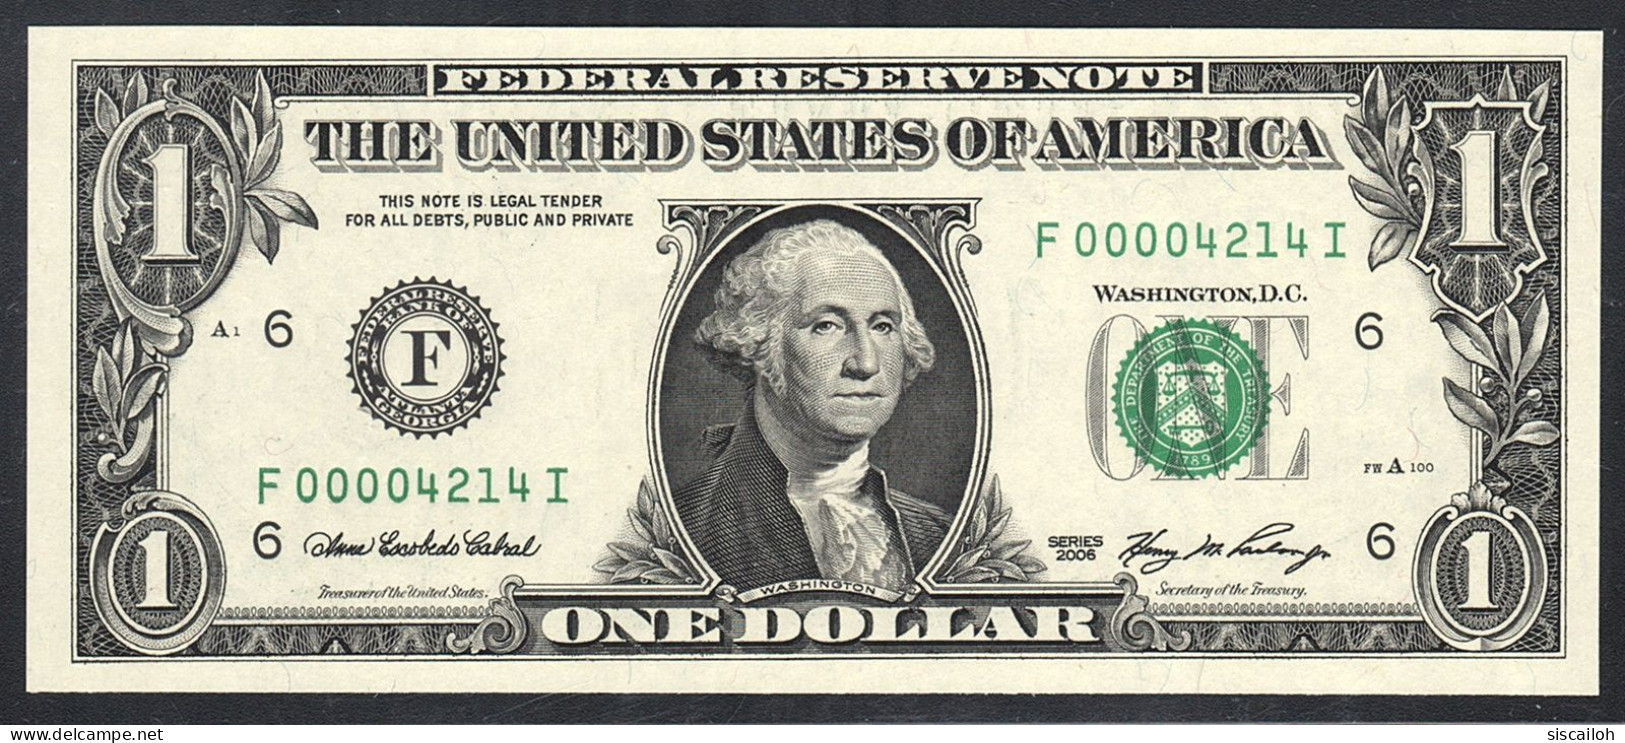 2006 USA $1 Federal Reserve Notes, Fr. 1933-F 2006 FW, F 00004213 I & F 00004214 I, PCGS 65 PPQ Gem New